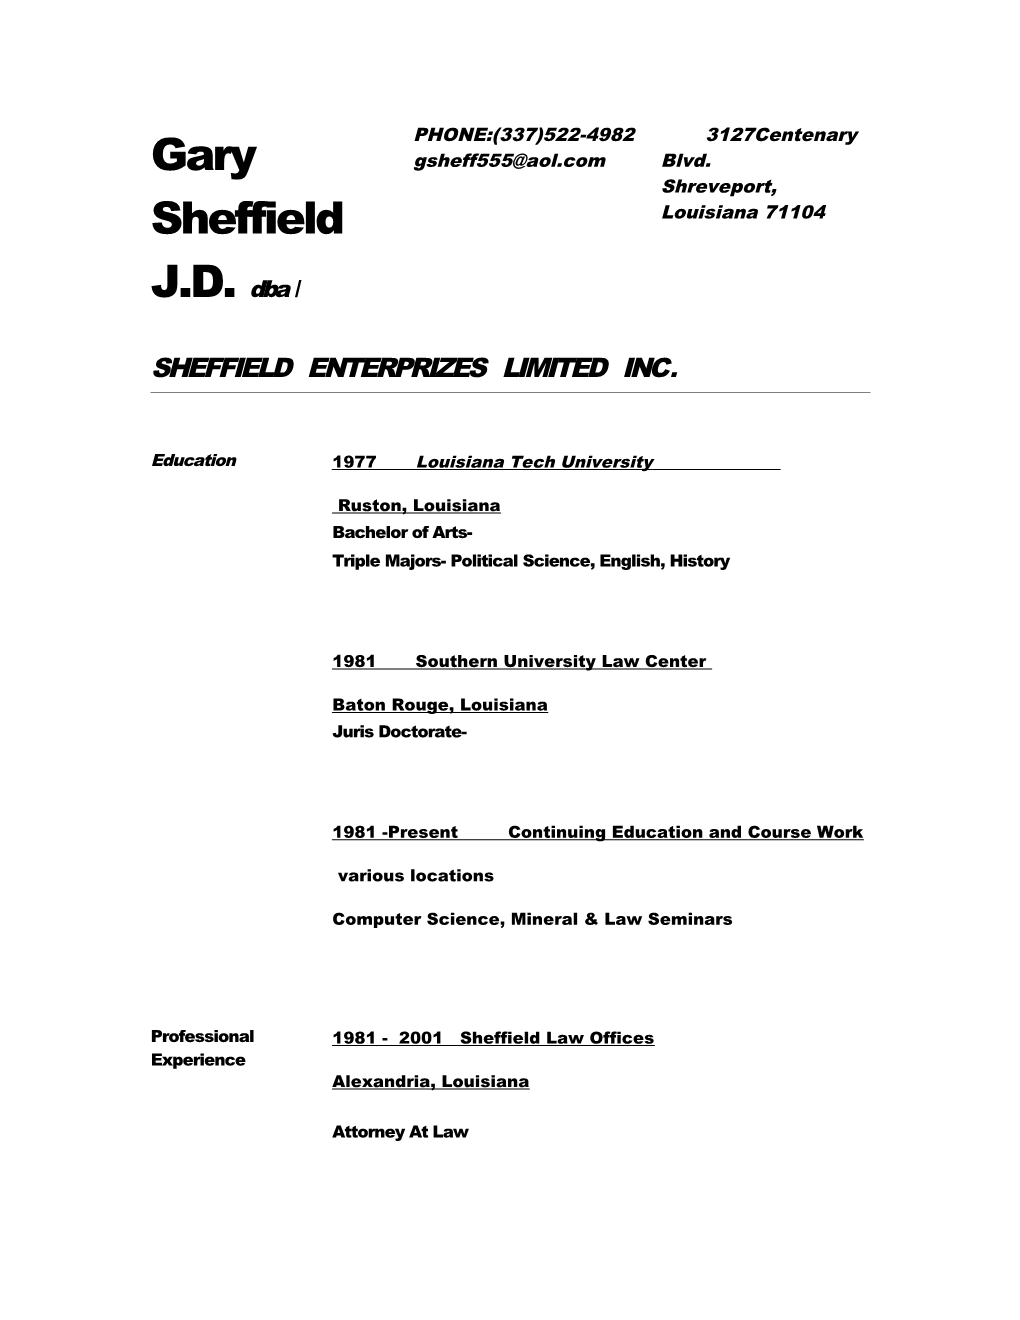 Sheffield Enterprizes Limited Inc